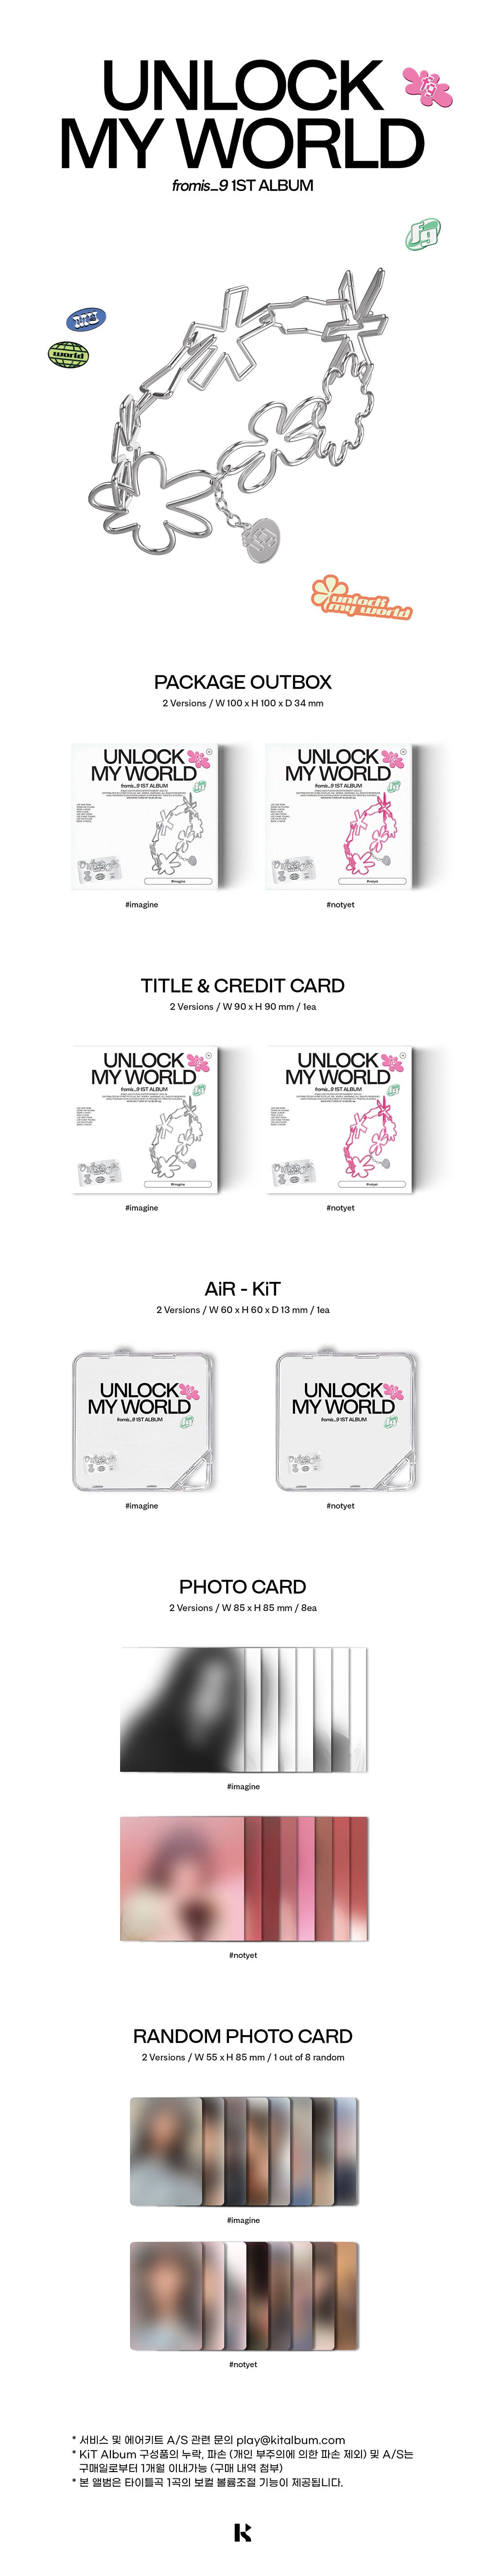 fromis_9 - Unlock My World [1st Album - KiT Ver.]